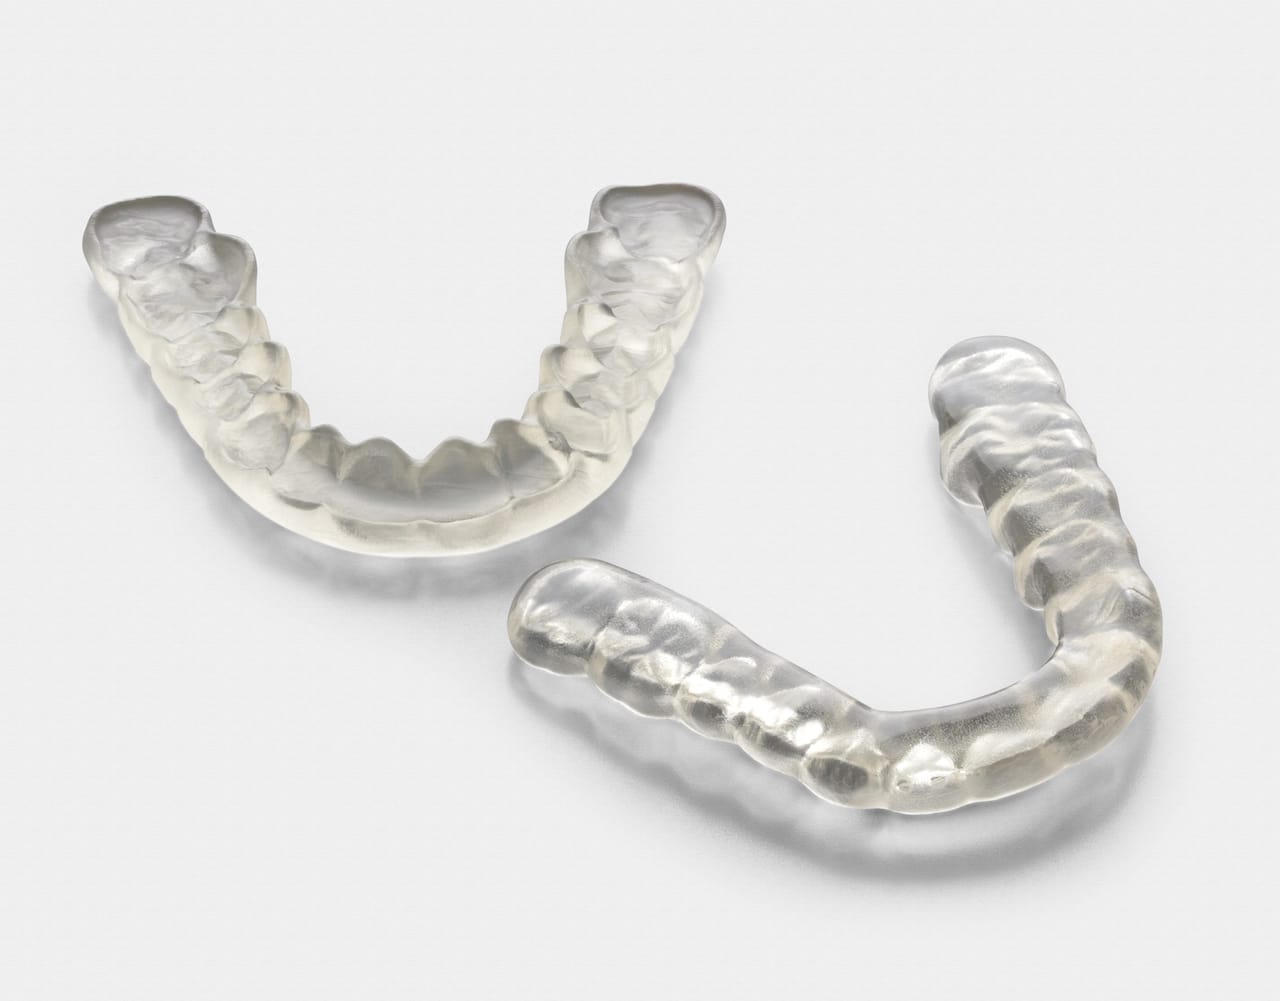  Dental splints quickly 3D printed form Formlabs' new Dental LT Clear resin 